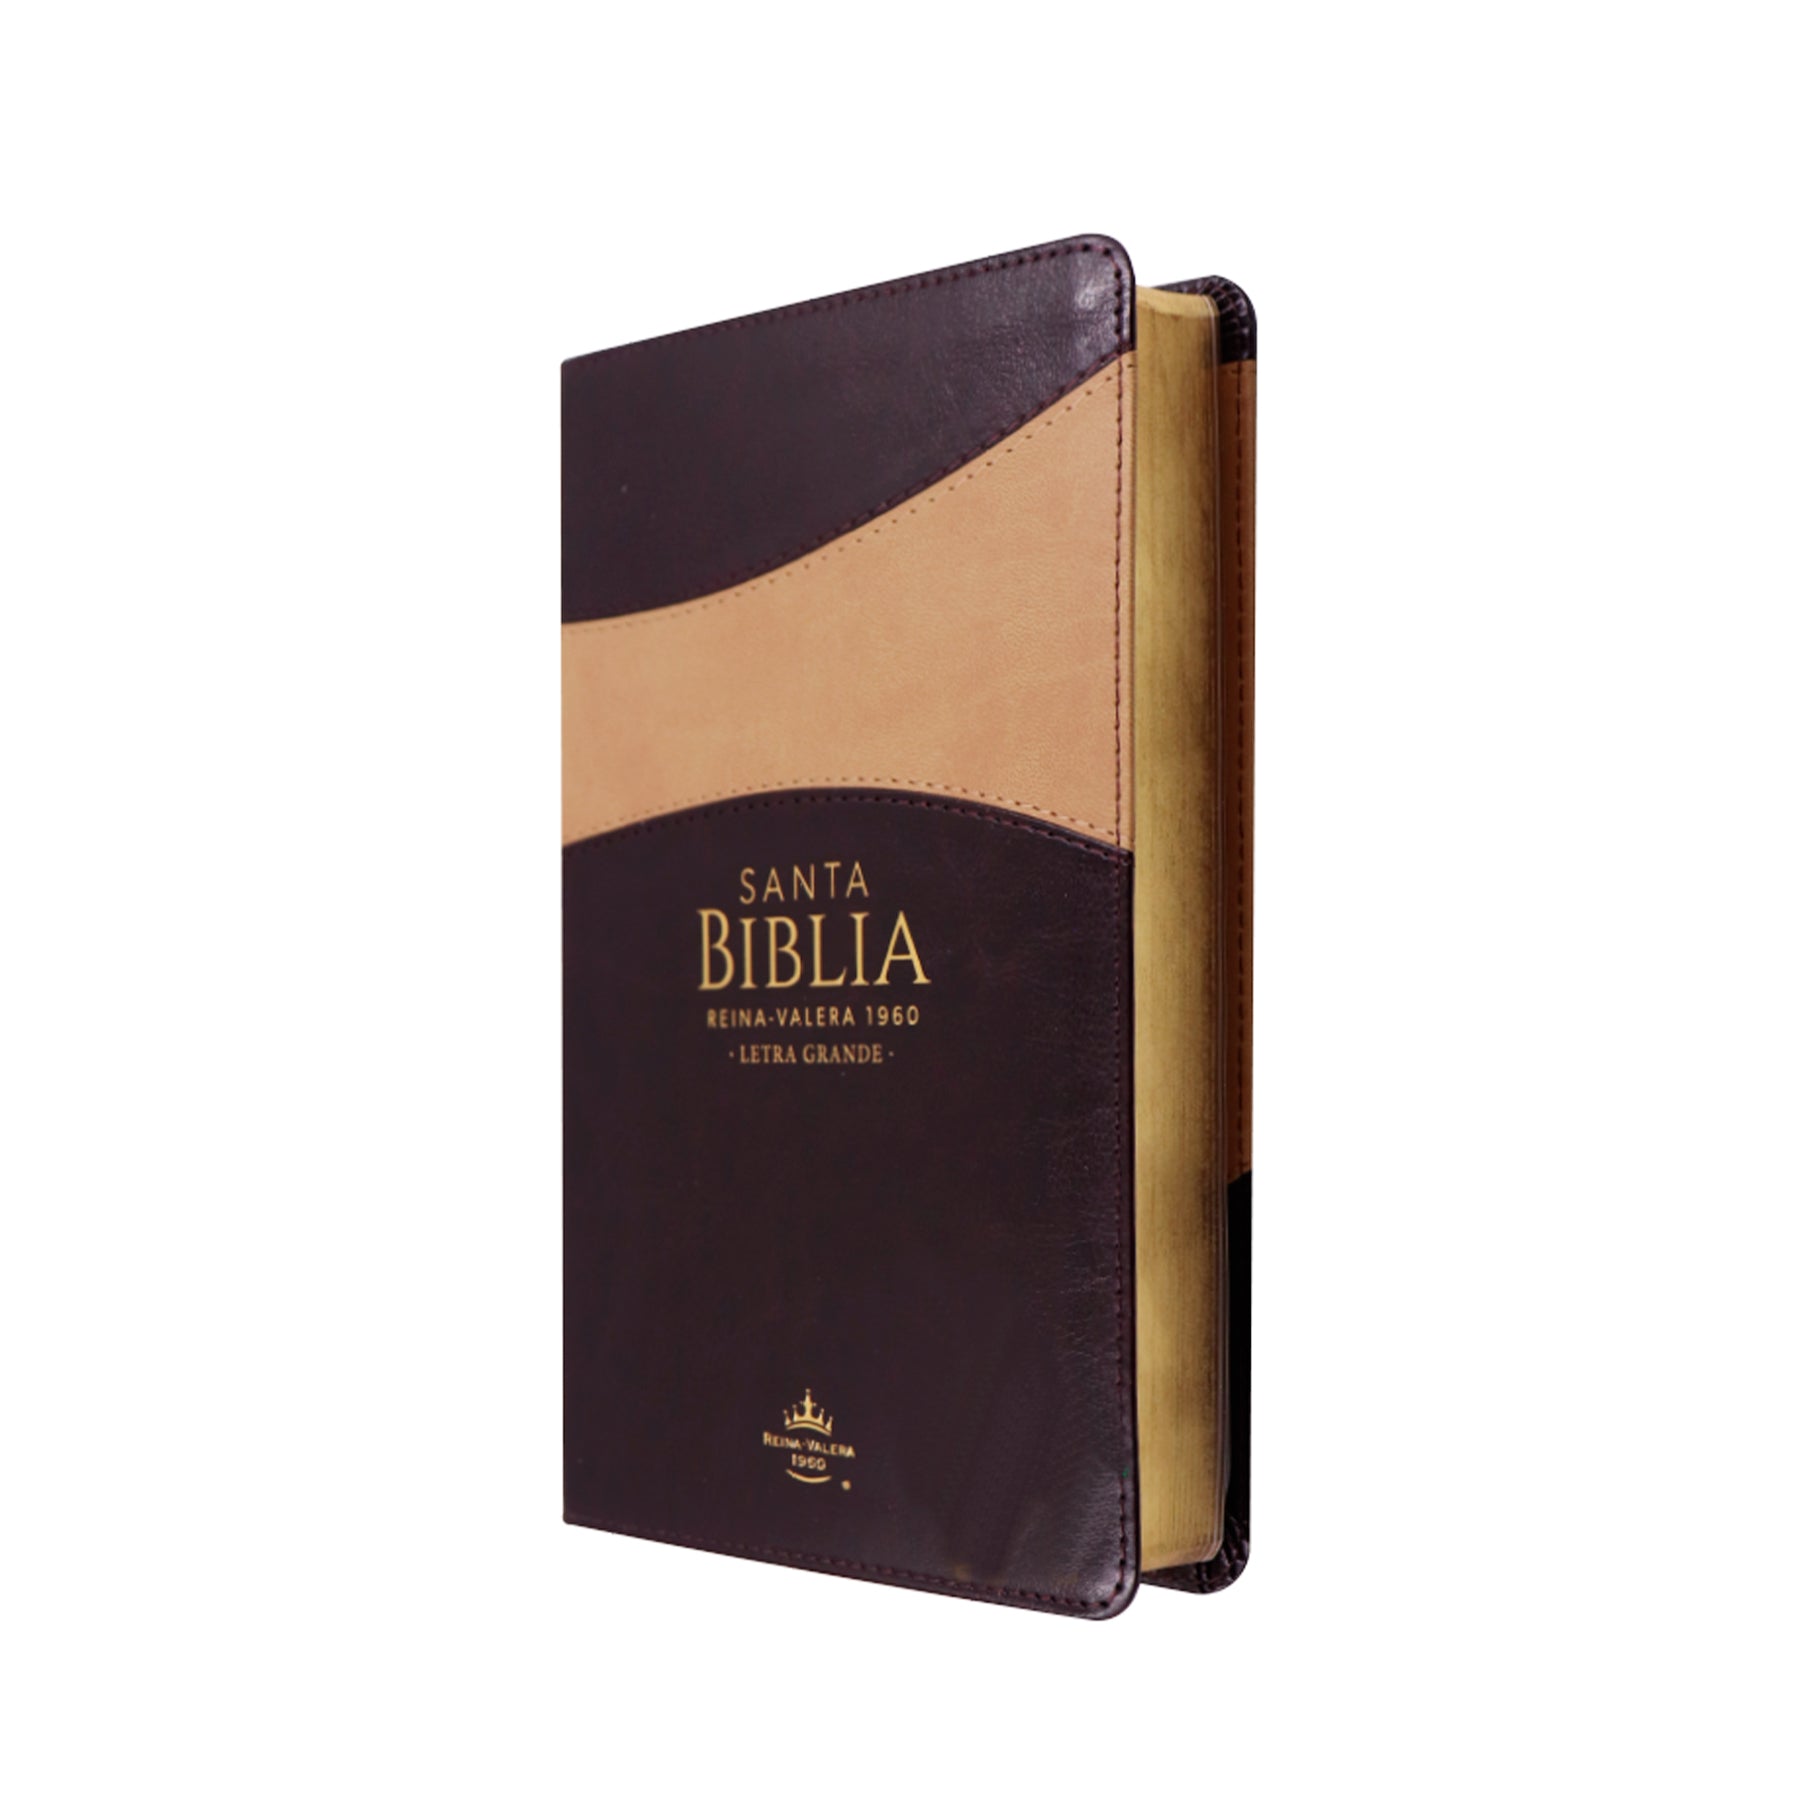 BIBLIA REINA VALERA 1960 LETRA GRANDE MANUAL BEIGE/CAFE